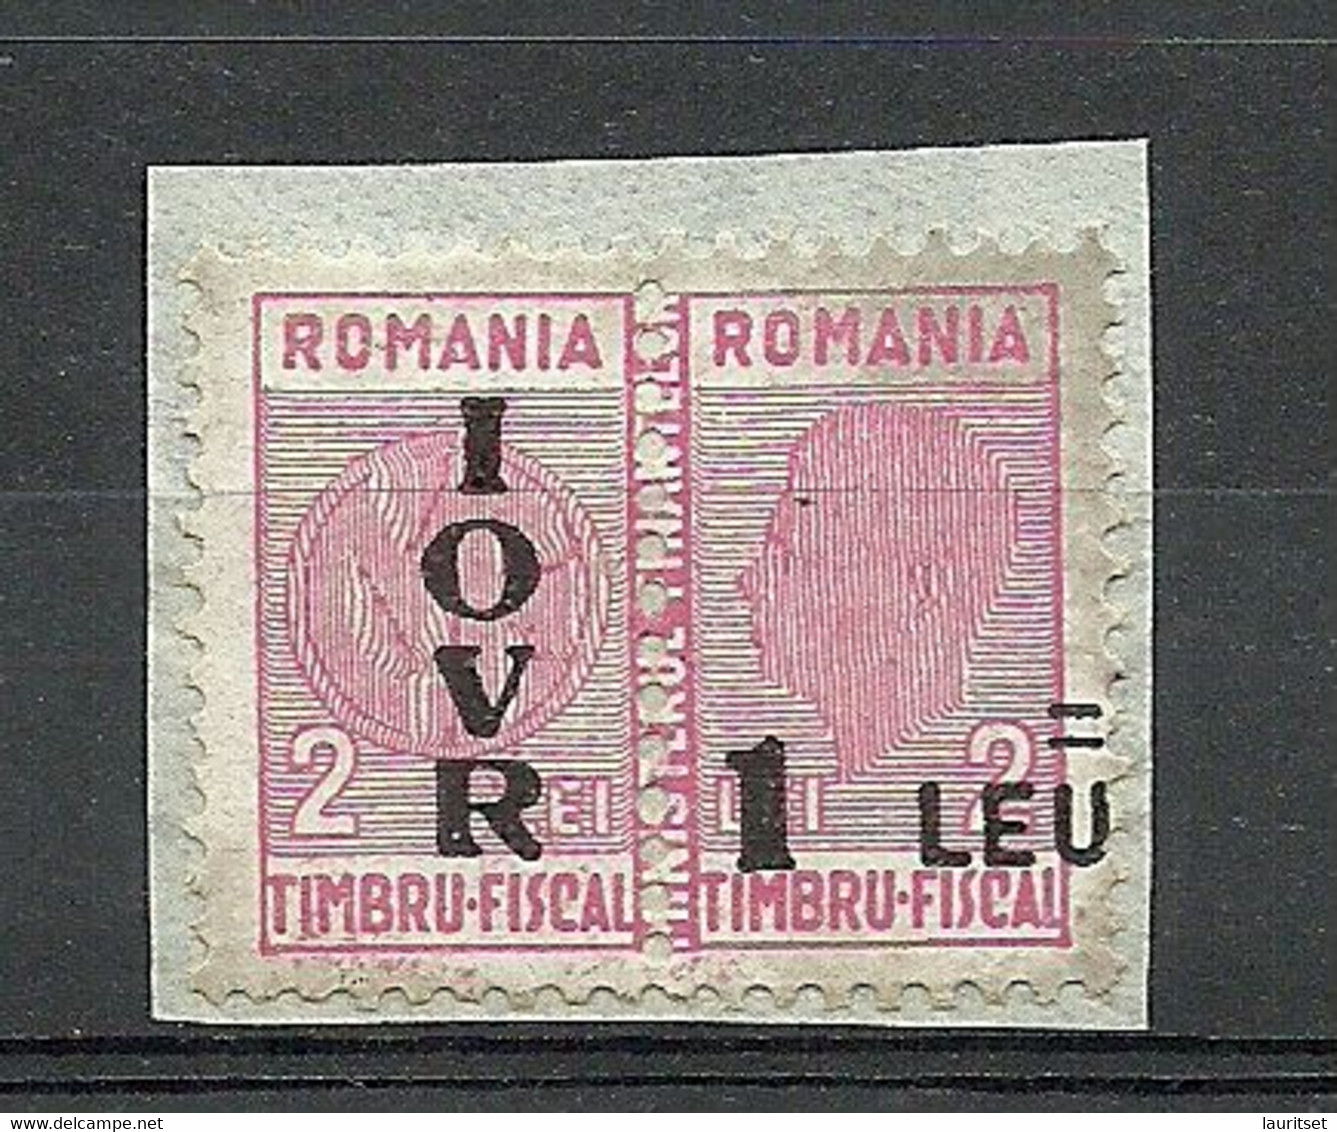 ROMANIA Rumänien 1947 Post-Steuermarke Tax Taxe Michel 36 (*) Unused On Paper - Fiscale Zegels